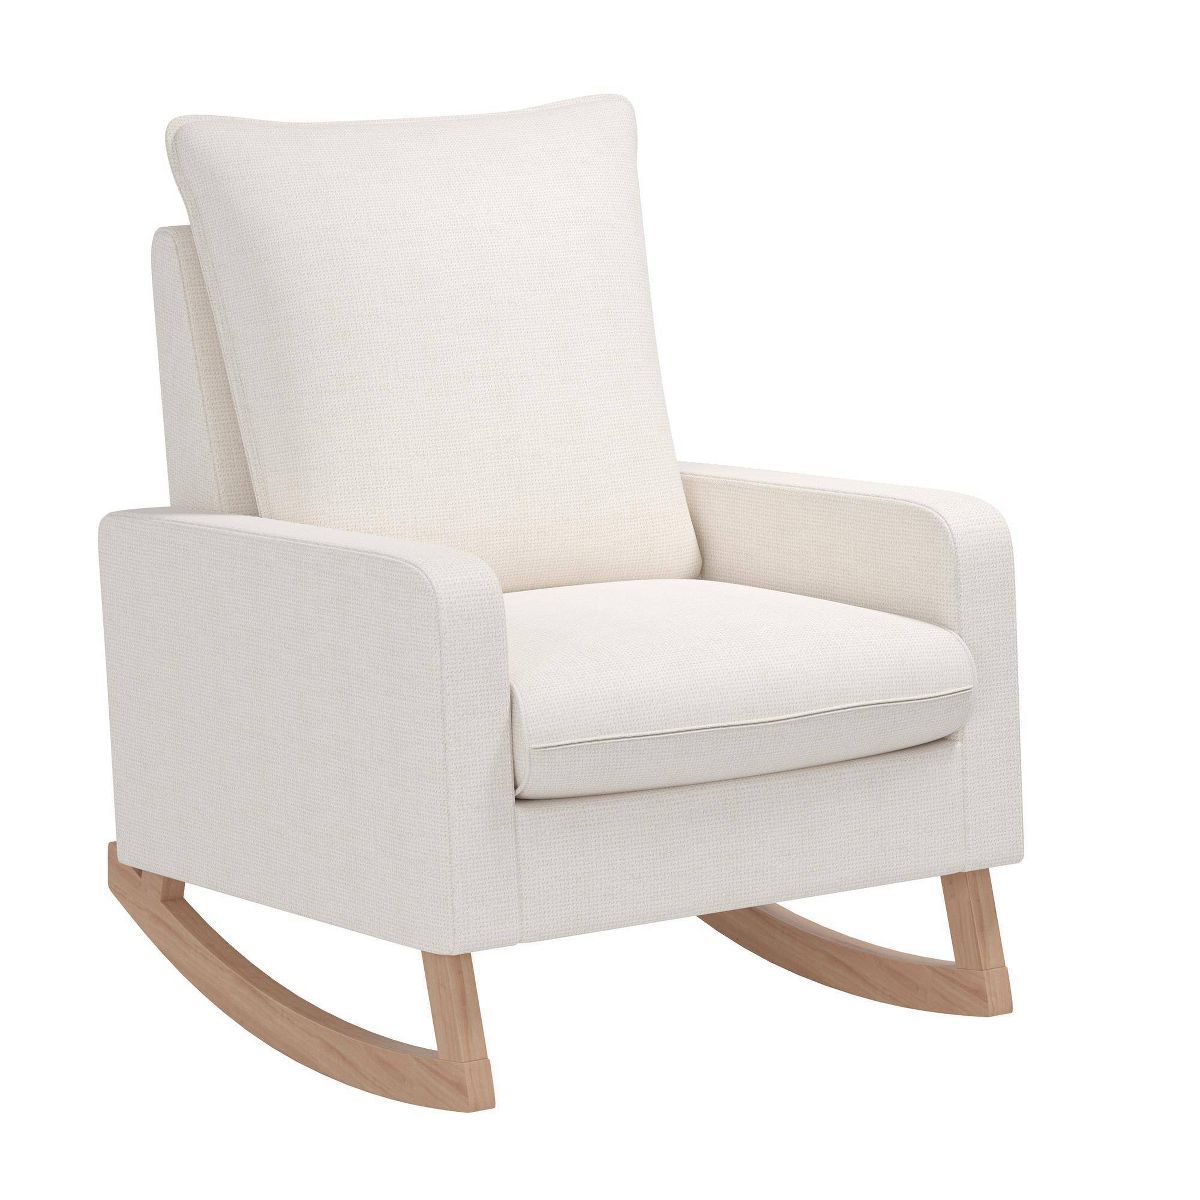 Novogratz Zayne Rocking Chair | Target